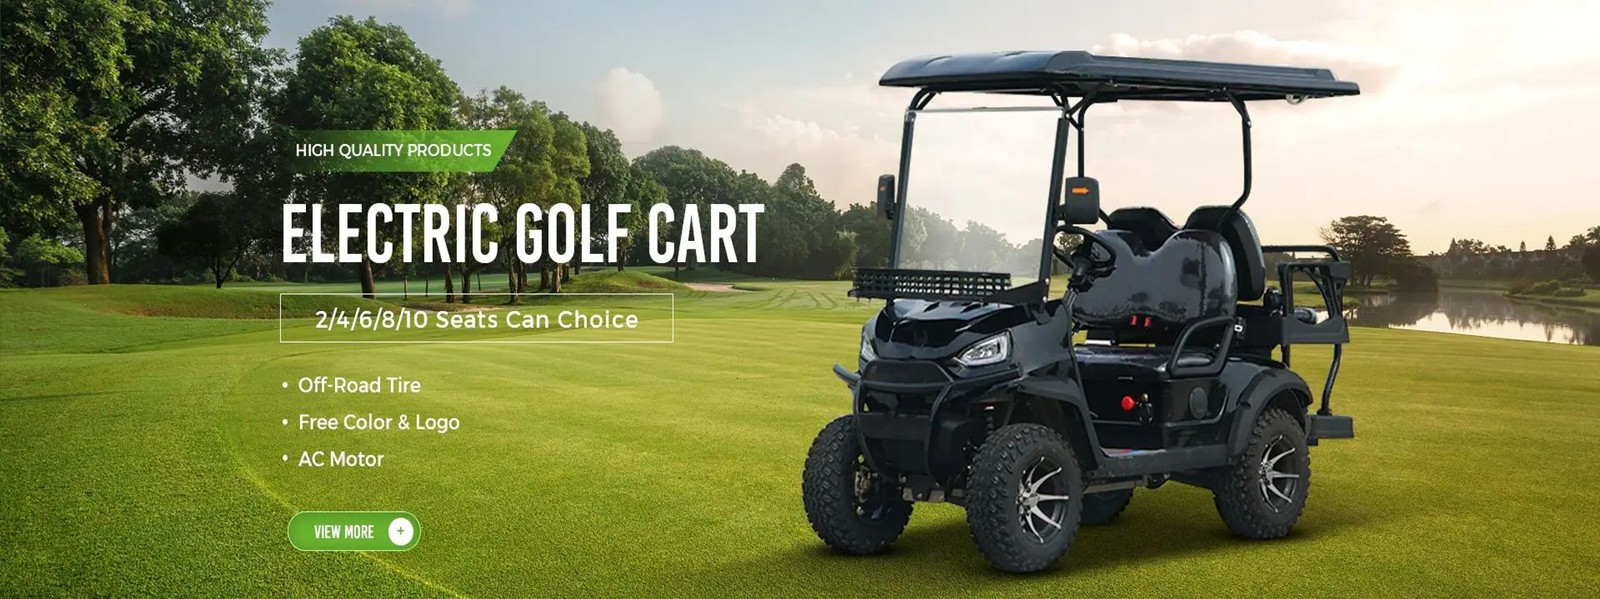 Hot sale Golf carts show